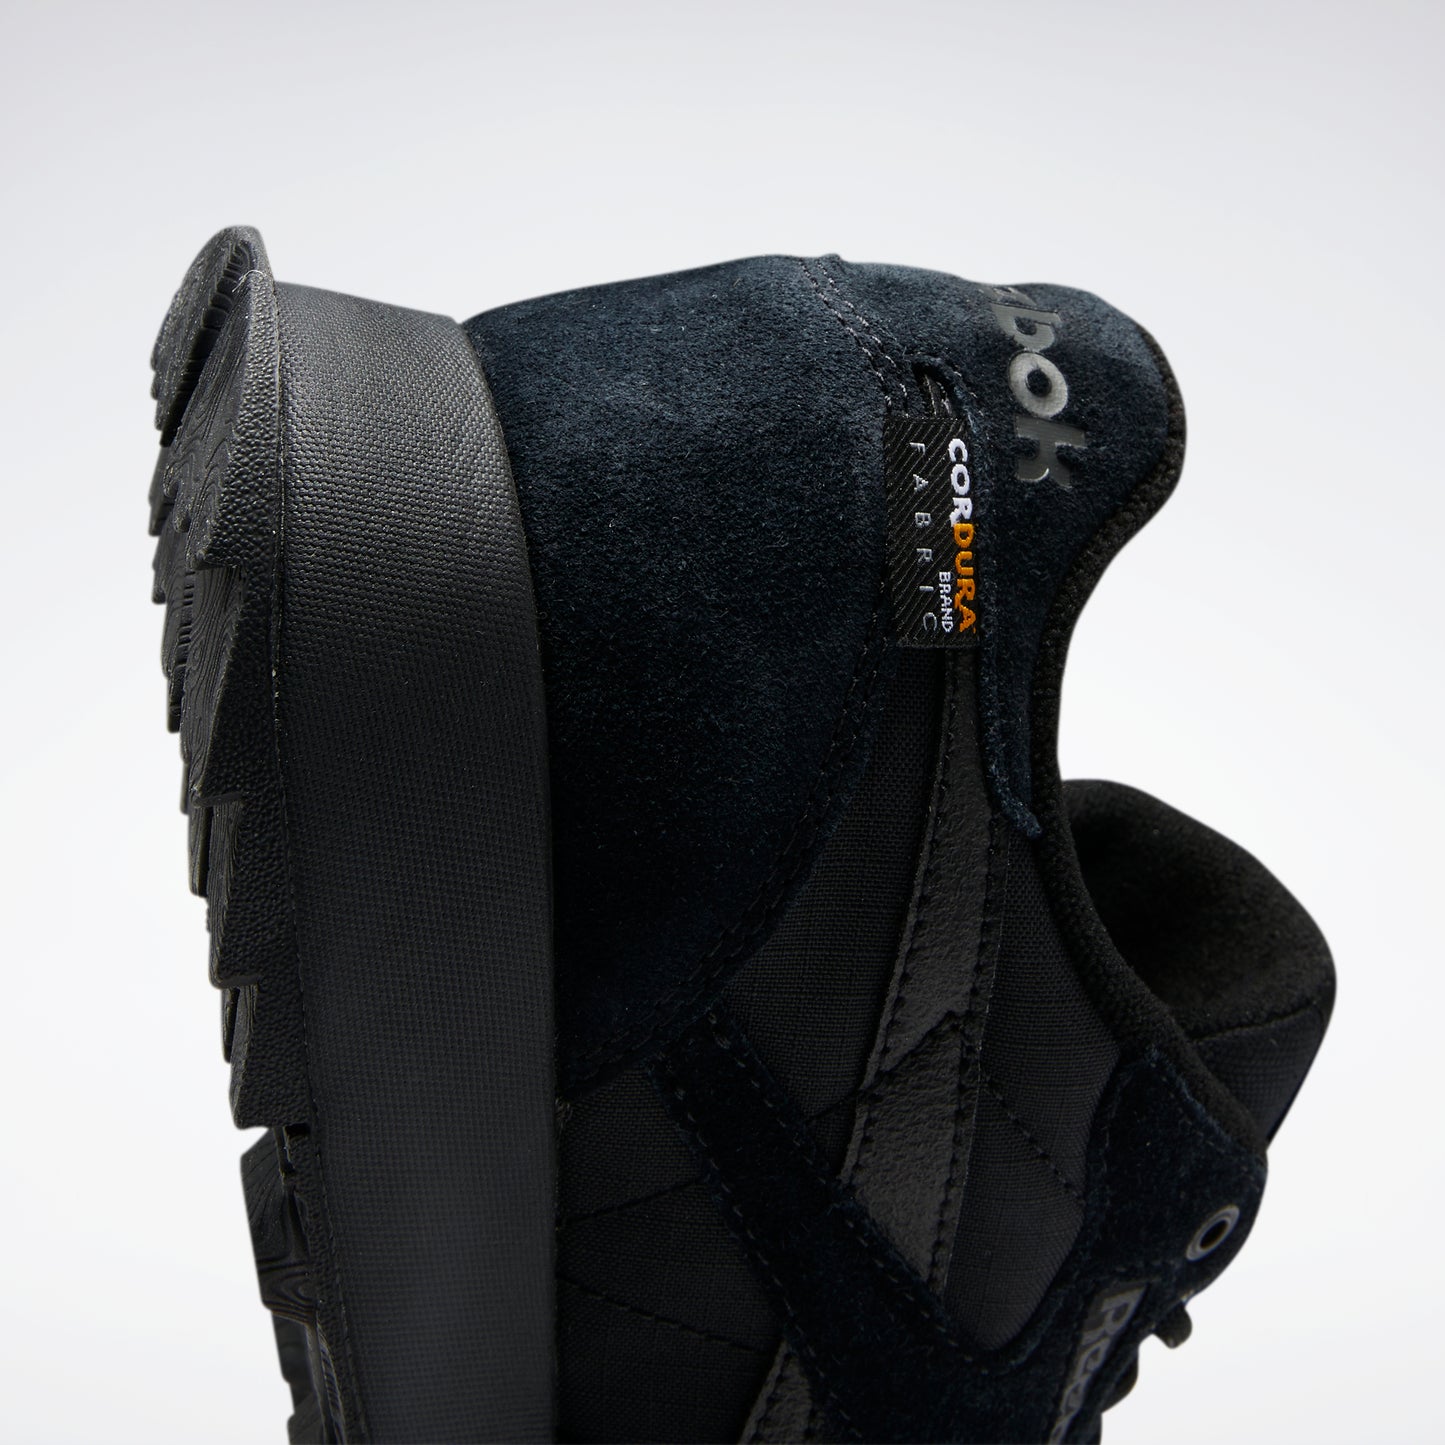 Reebok Footwear Men Classic Leather Shoes Cblack/Cblack/Purgry